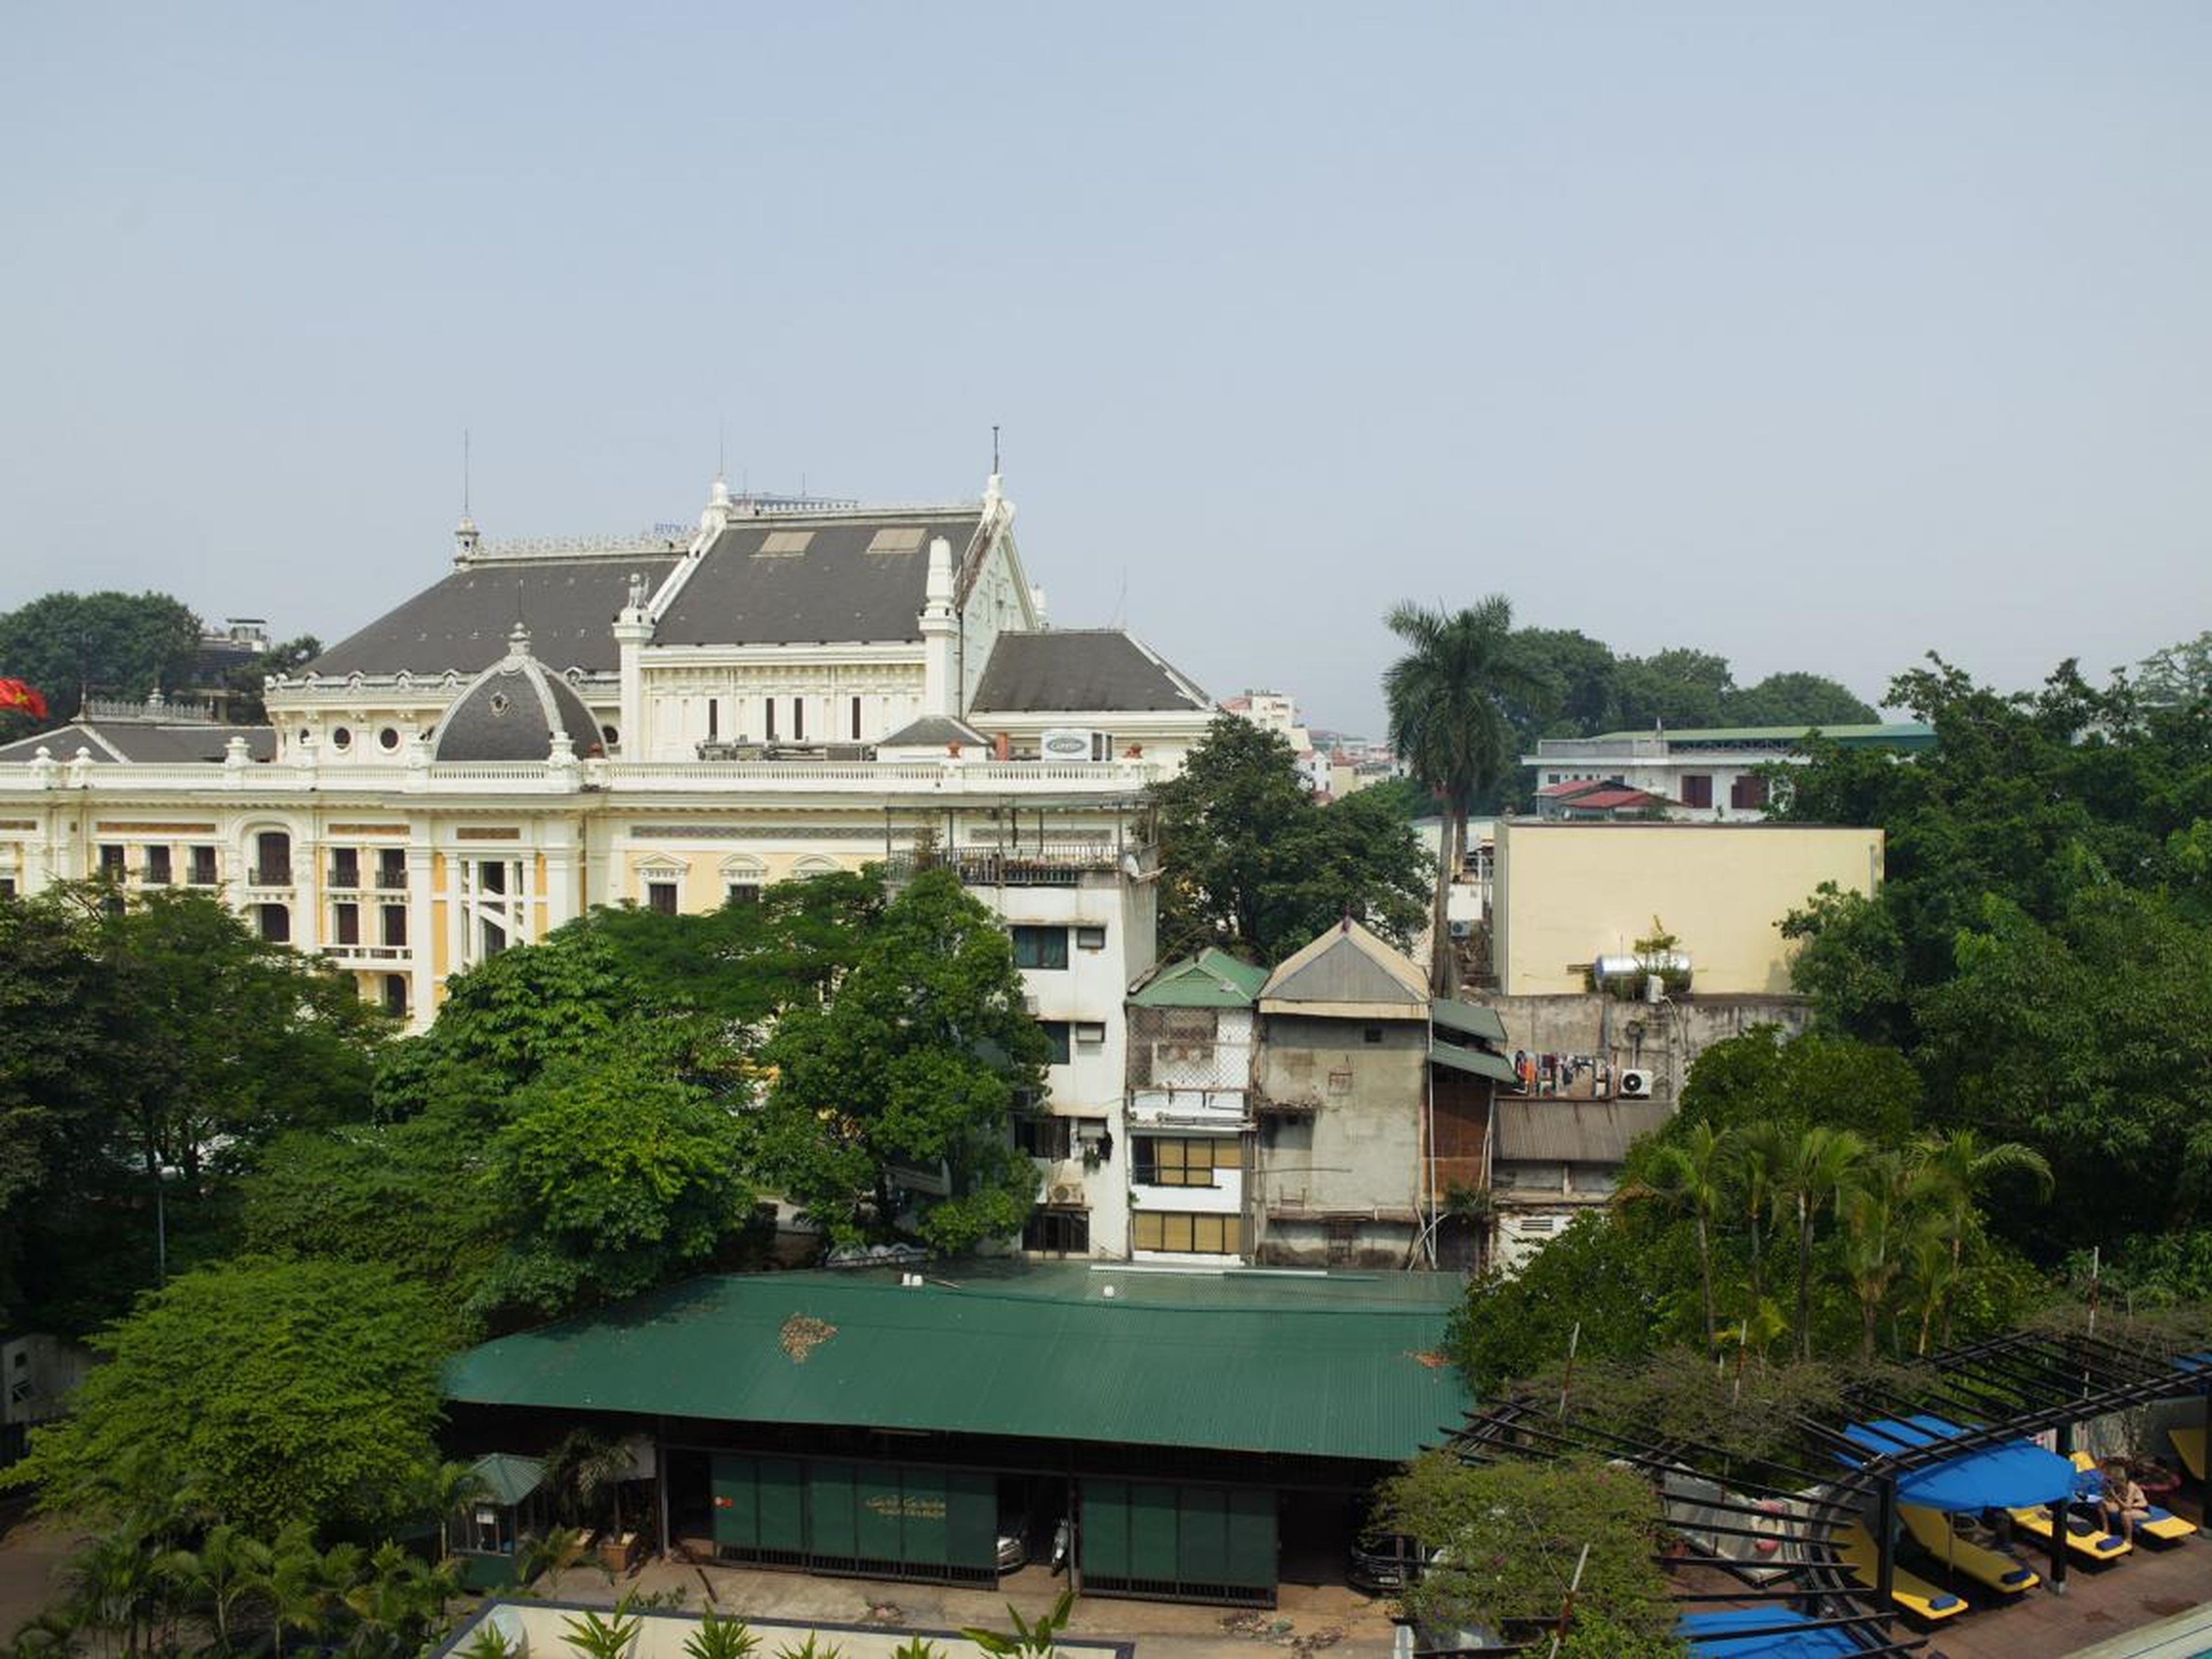 View of Hanoi, Vietnam from the hotel window.